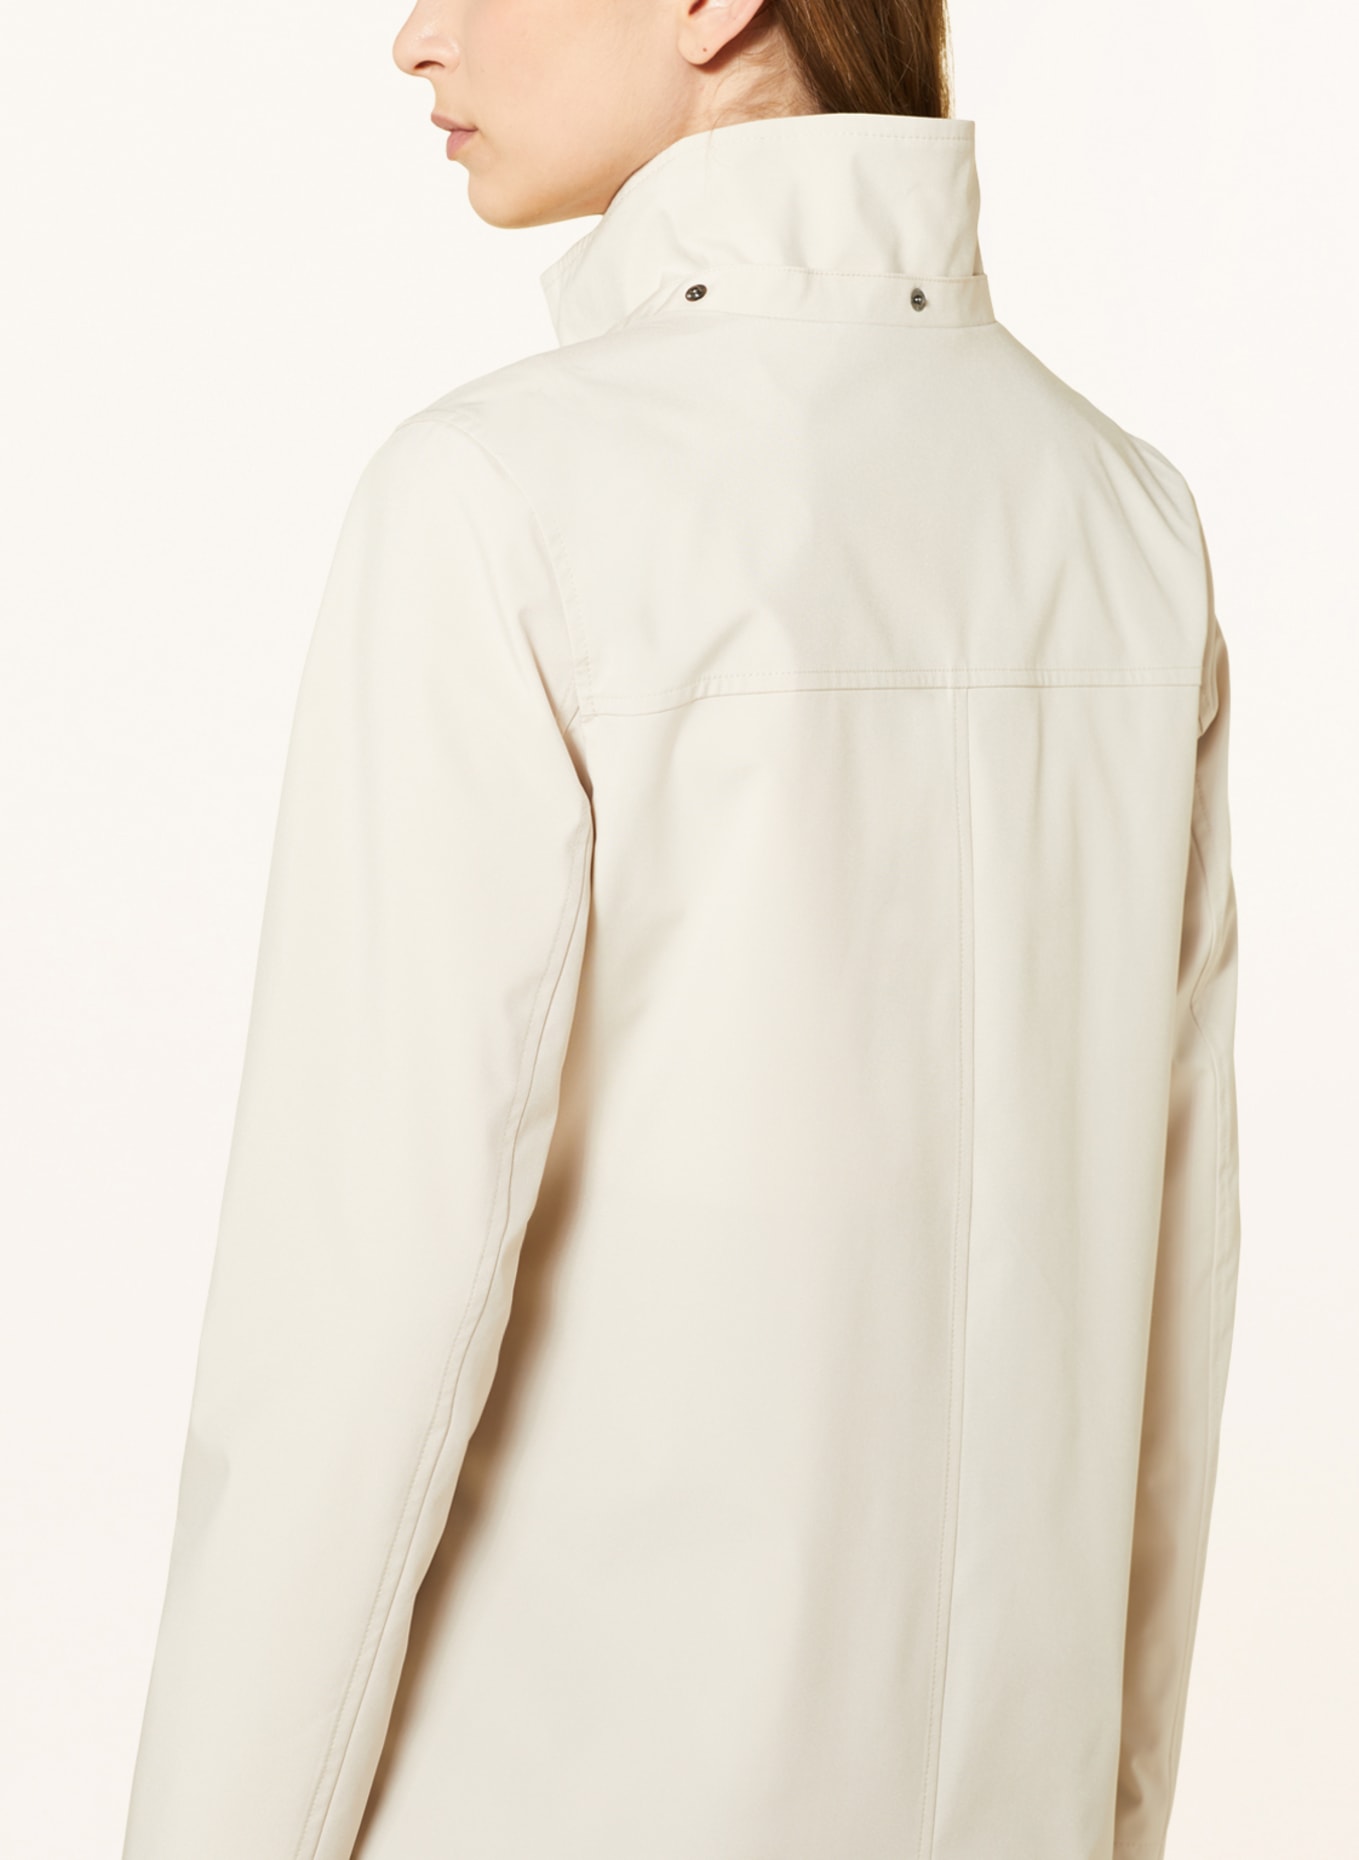 FUCHS SCHMITT Jacke mit abnehmbarer Kapuze, Farbe: BEIGE (Bild 6)